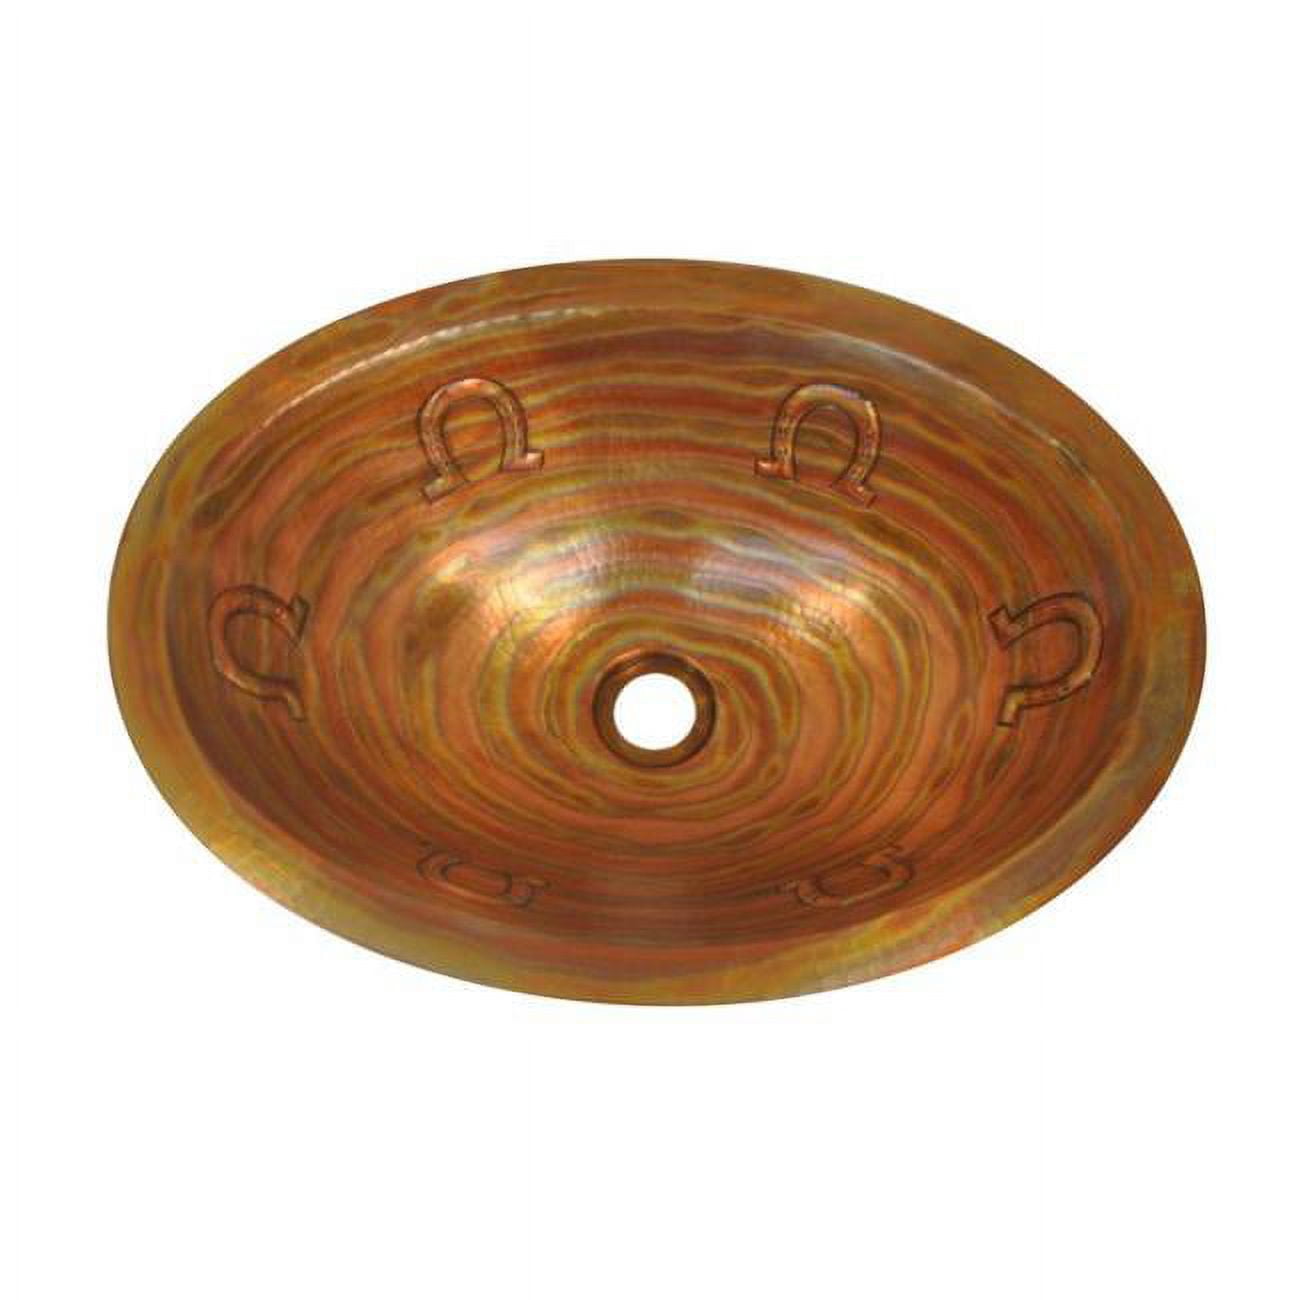 Cos-hs-19-rl-br Copper Oval Bath Sink, Bright - Horseshoe Design - 6 X 14 X 19 In.